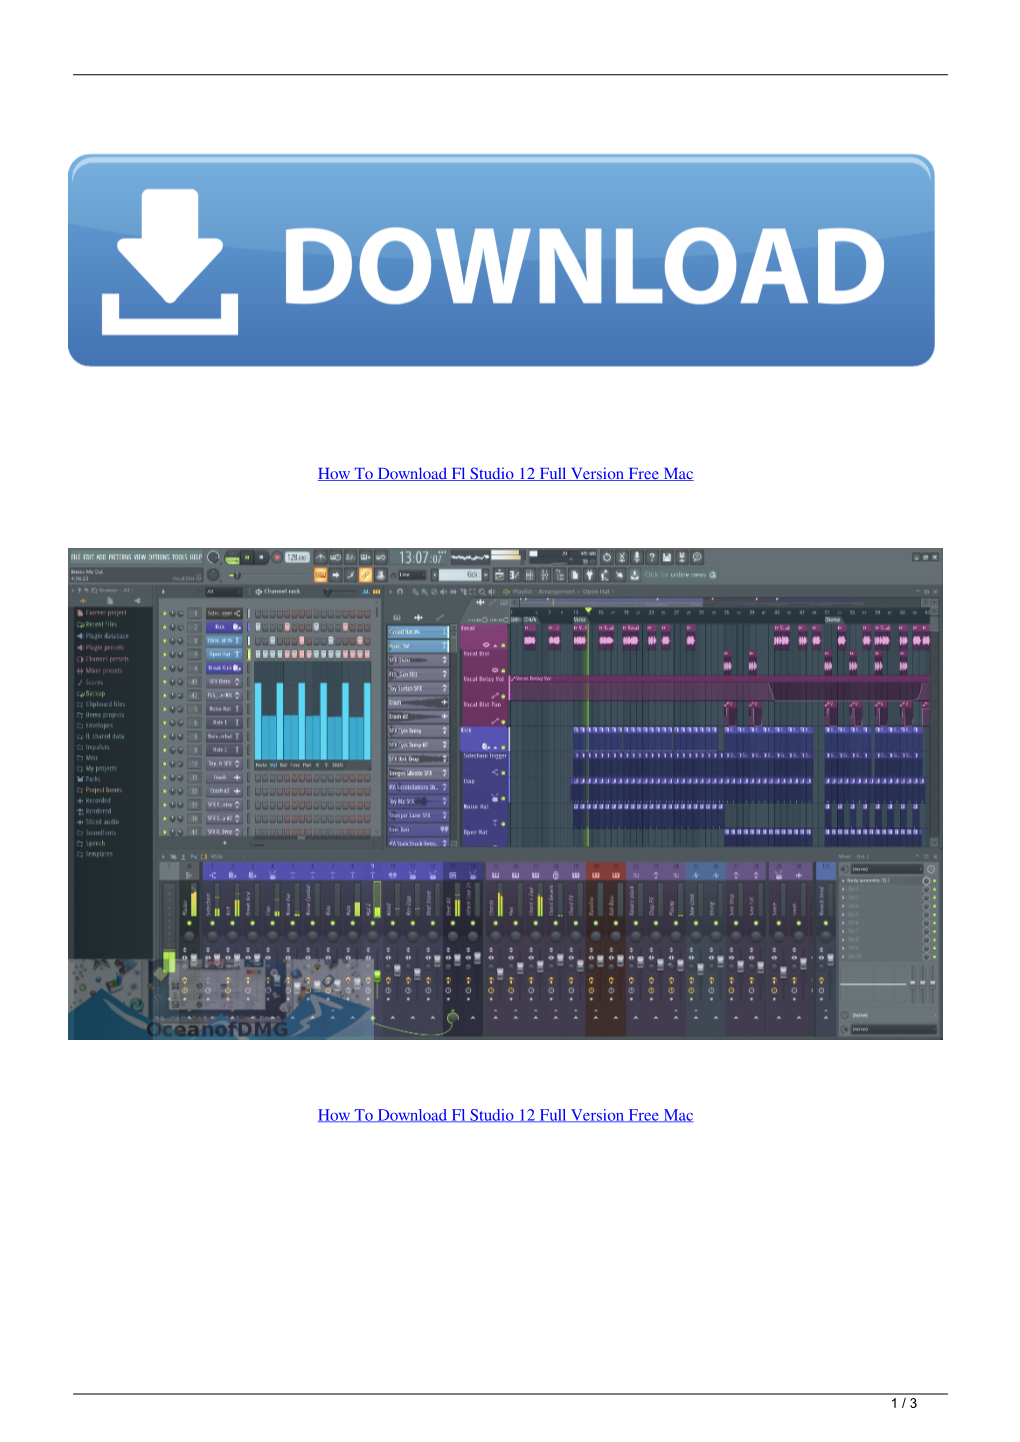 How to Download Fl Studio 12 Full Version Free Mac